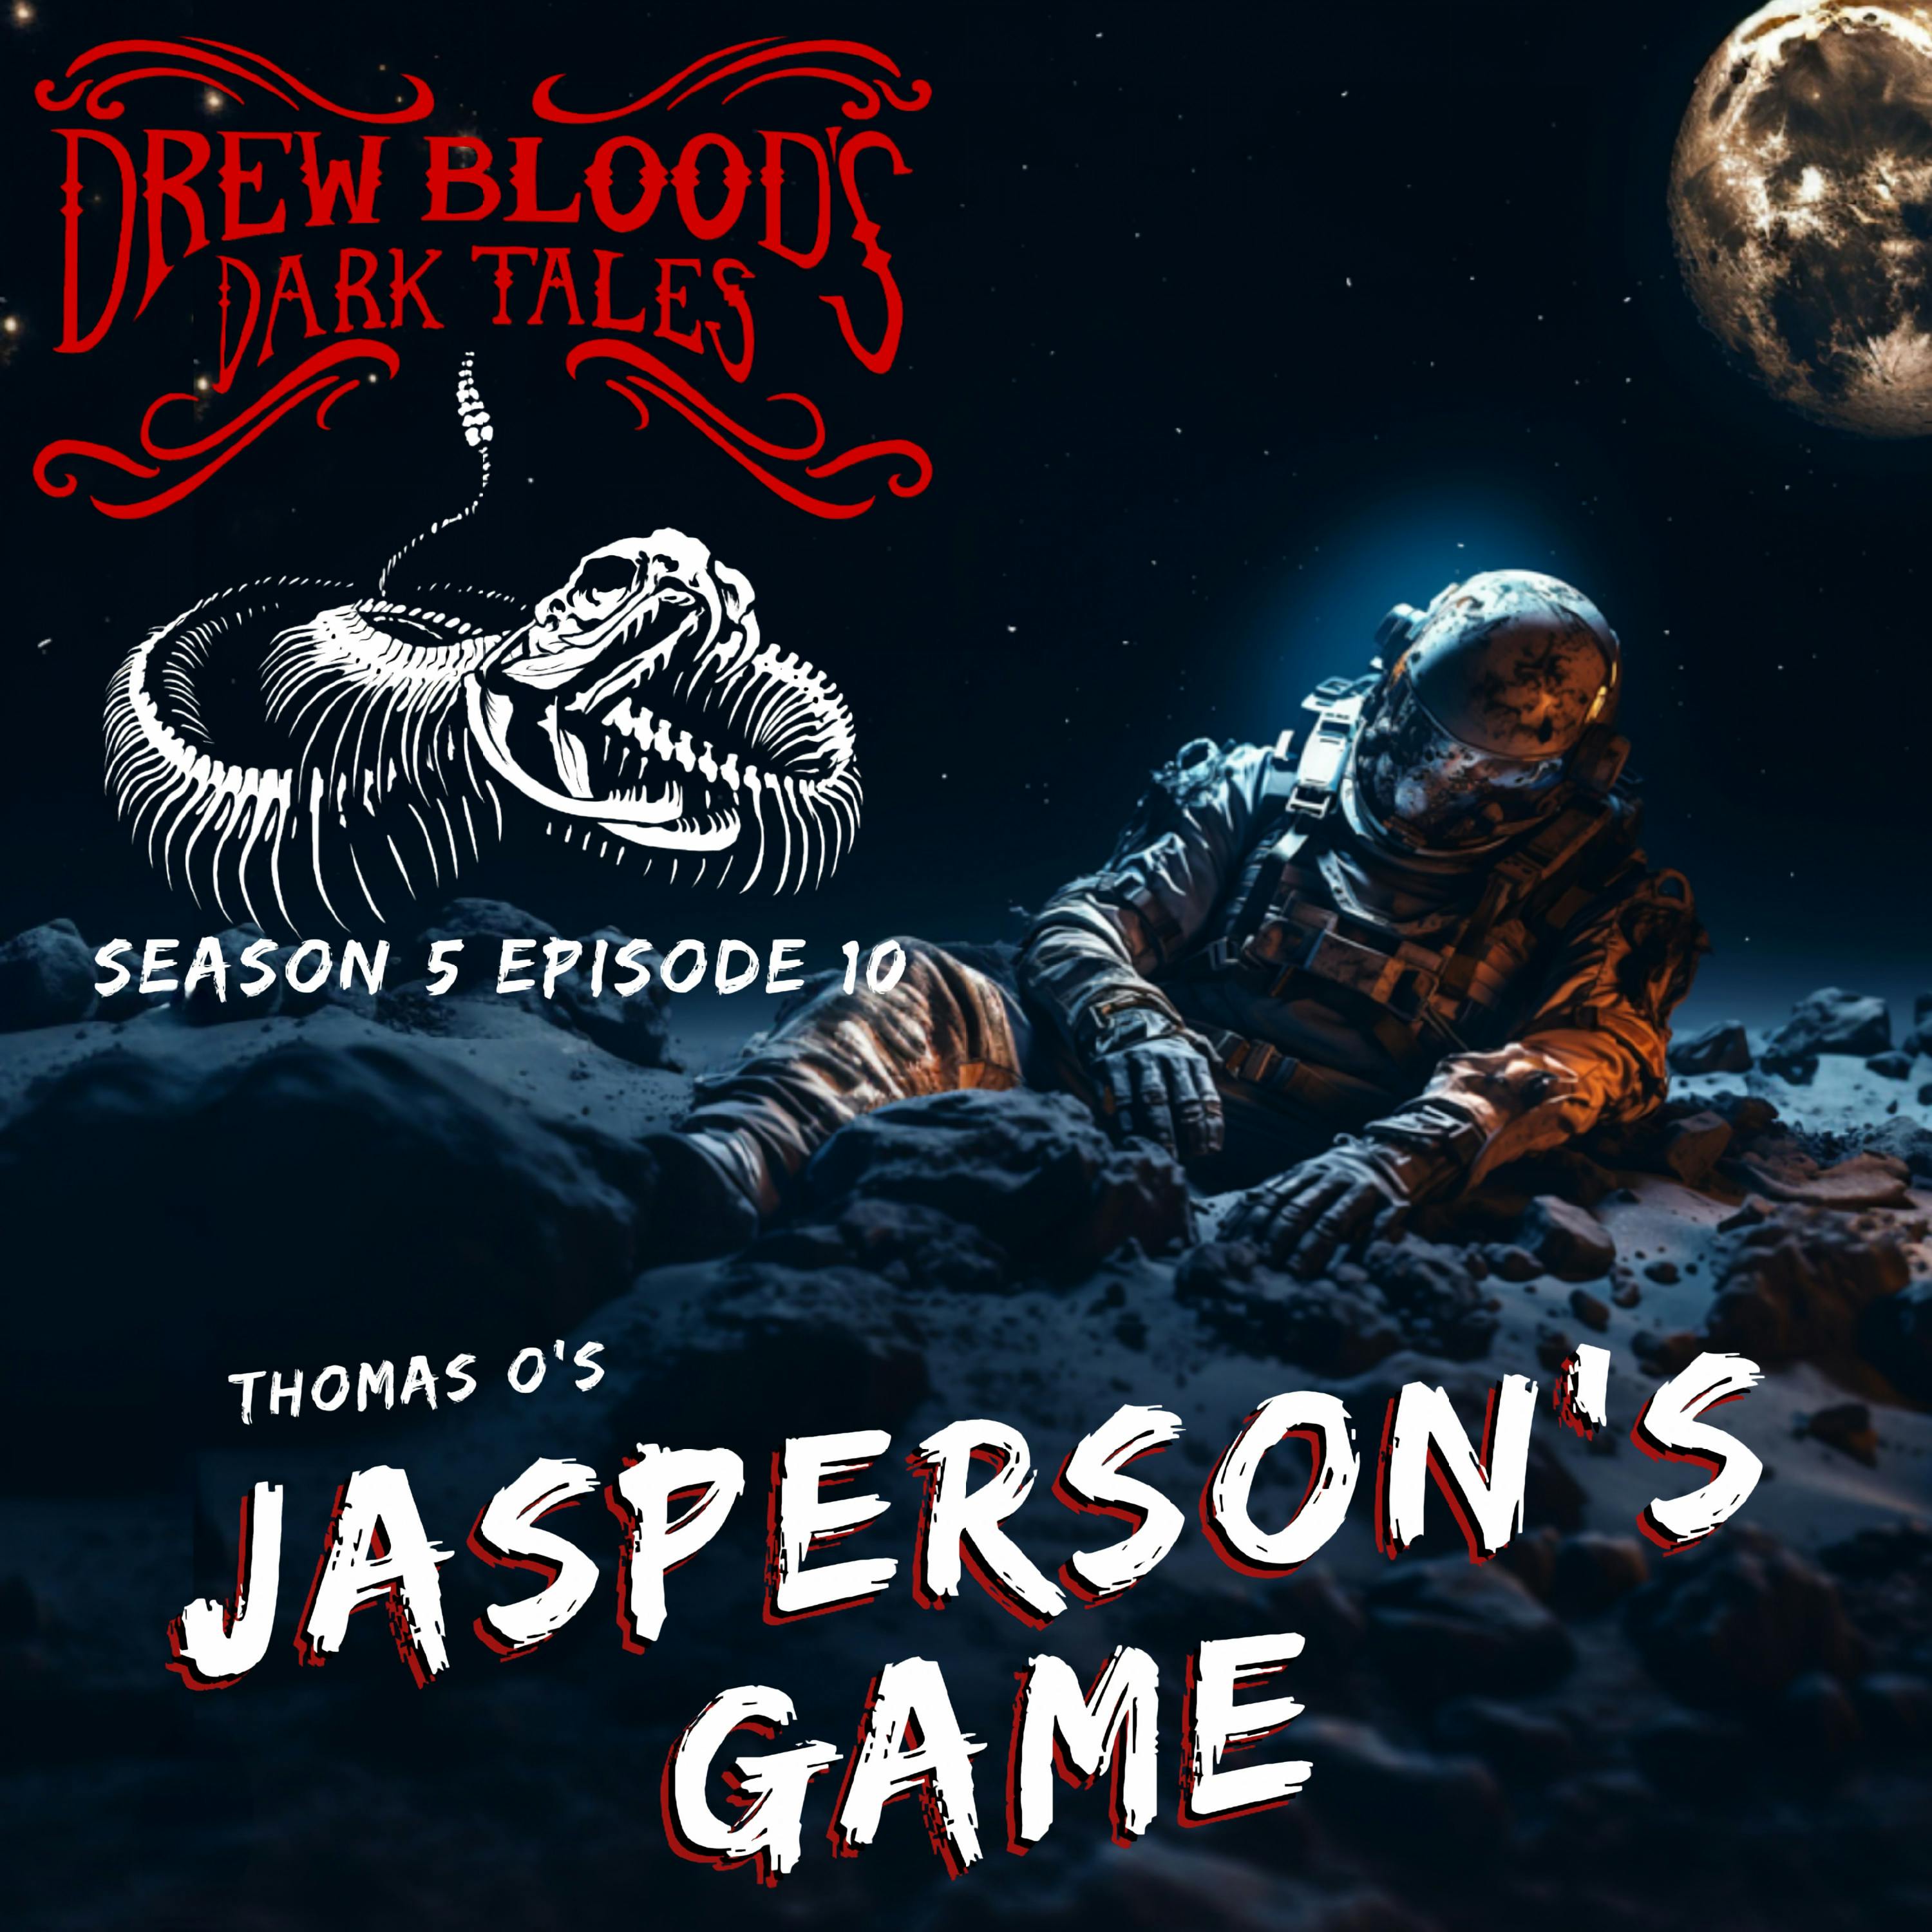 S5E10 - "Jasperson's Game" - Drew Blood